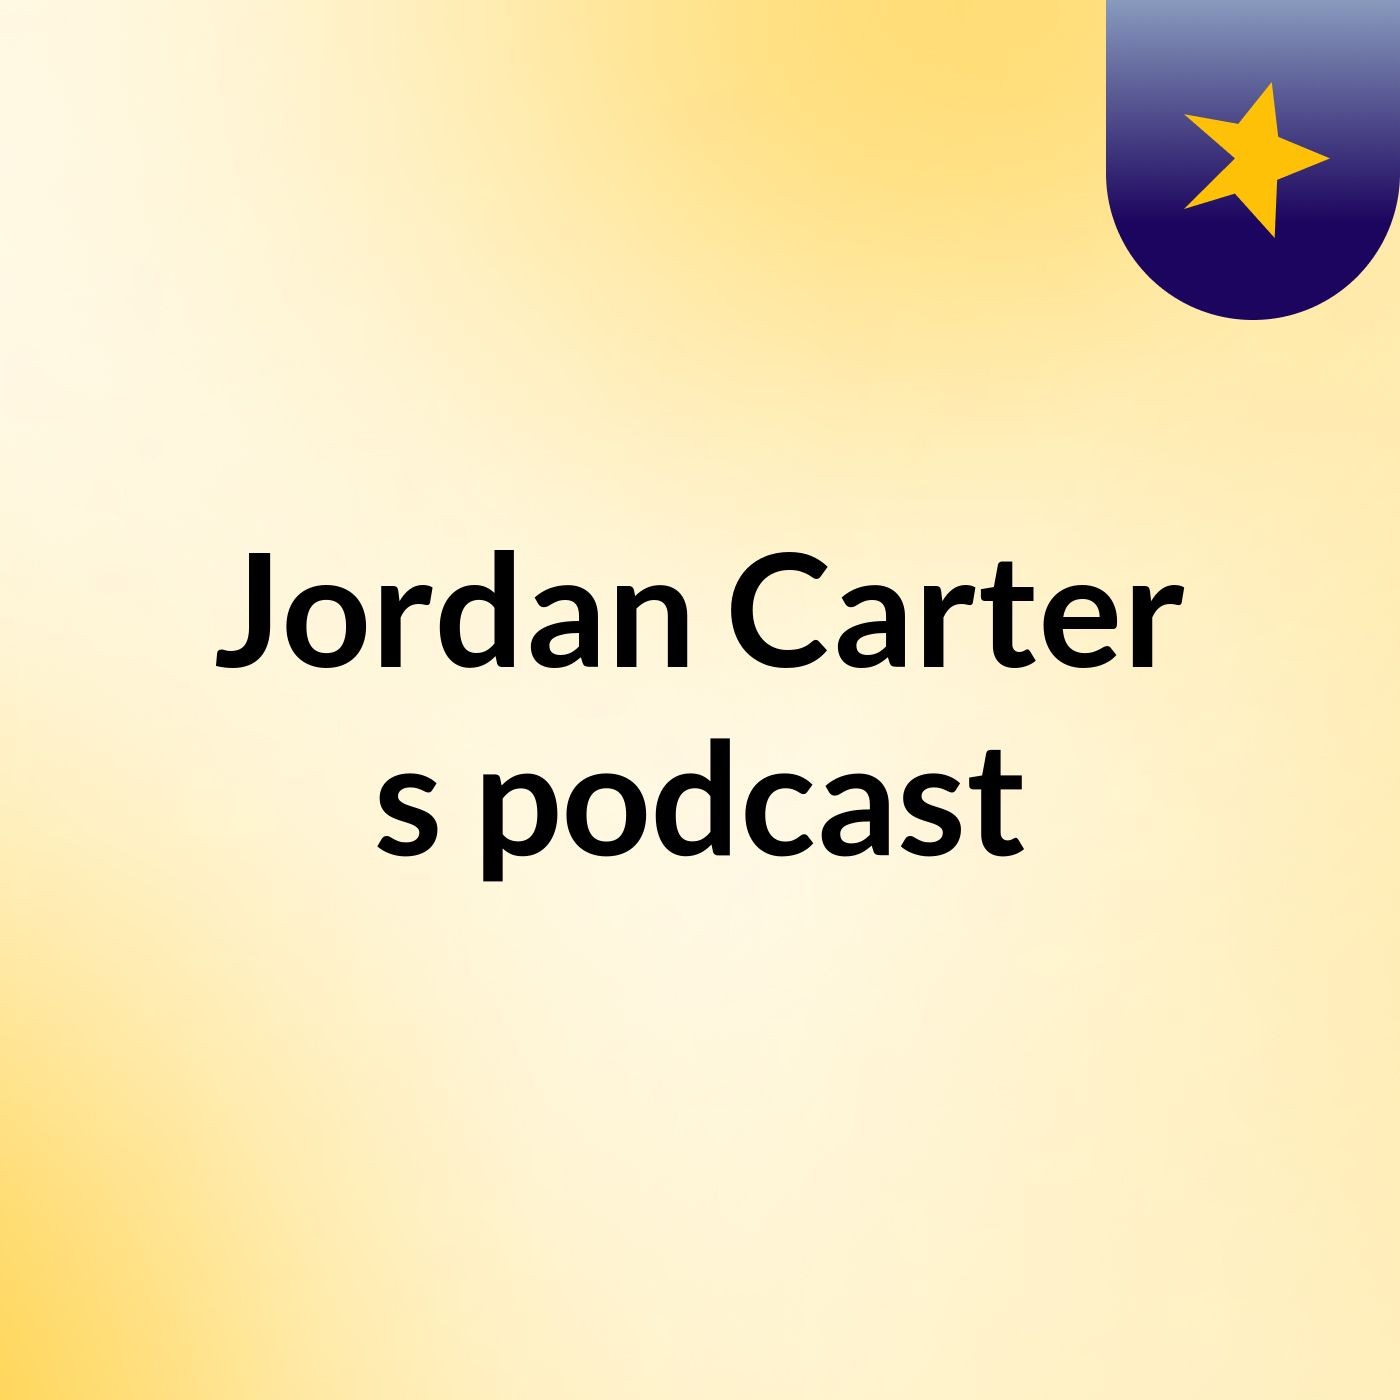 Episode 3 - Jordan Carter's podcast